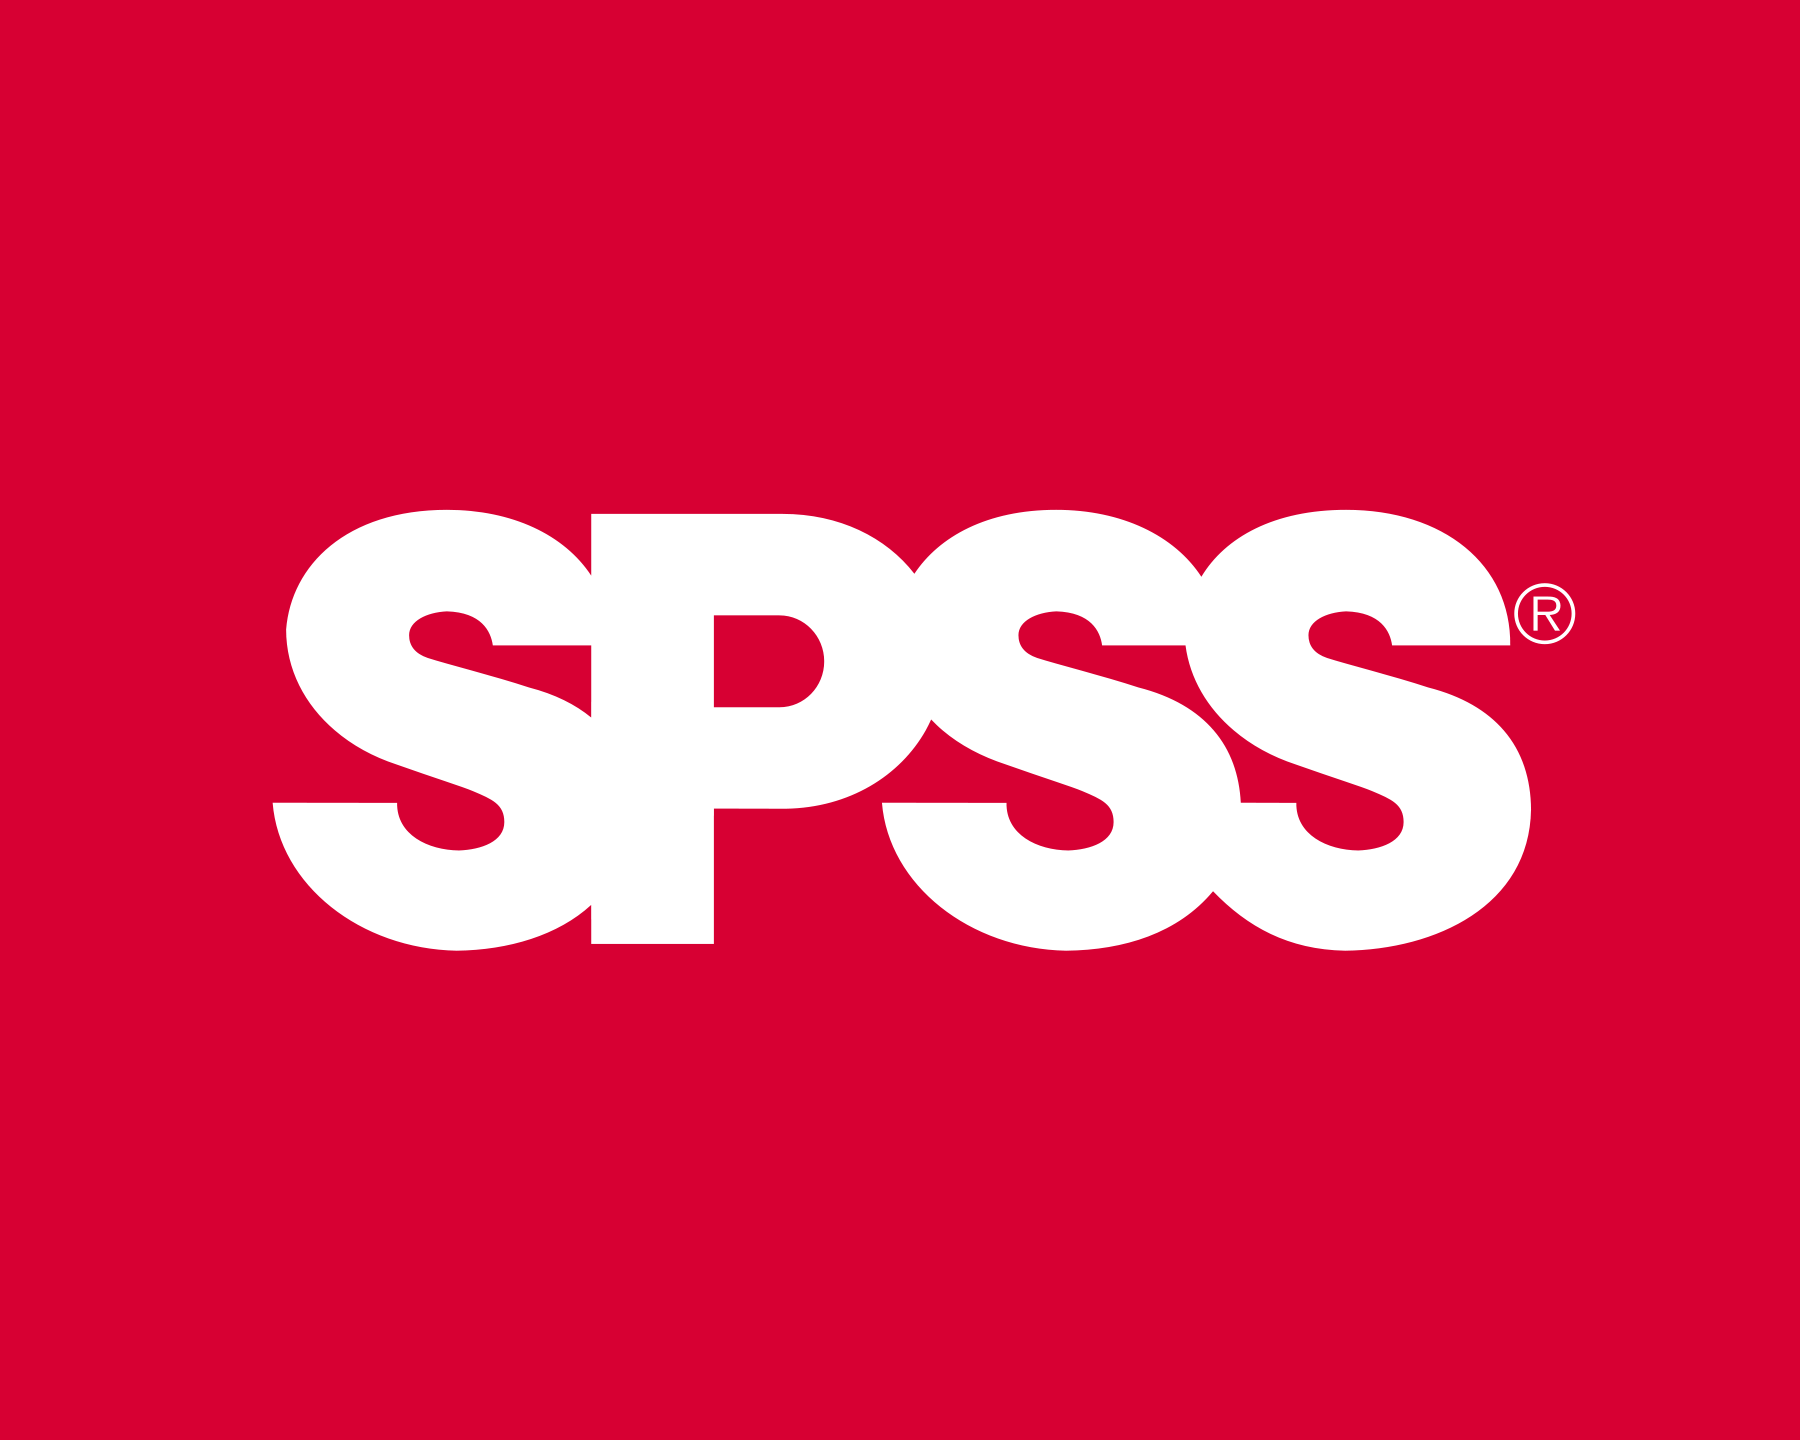 SPSS Statistics